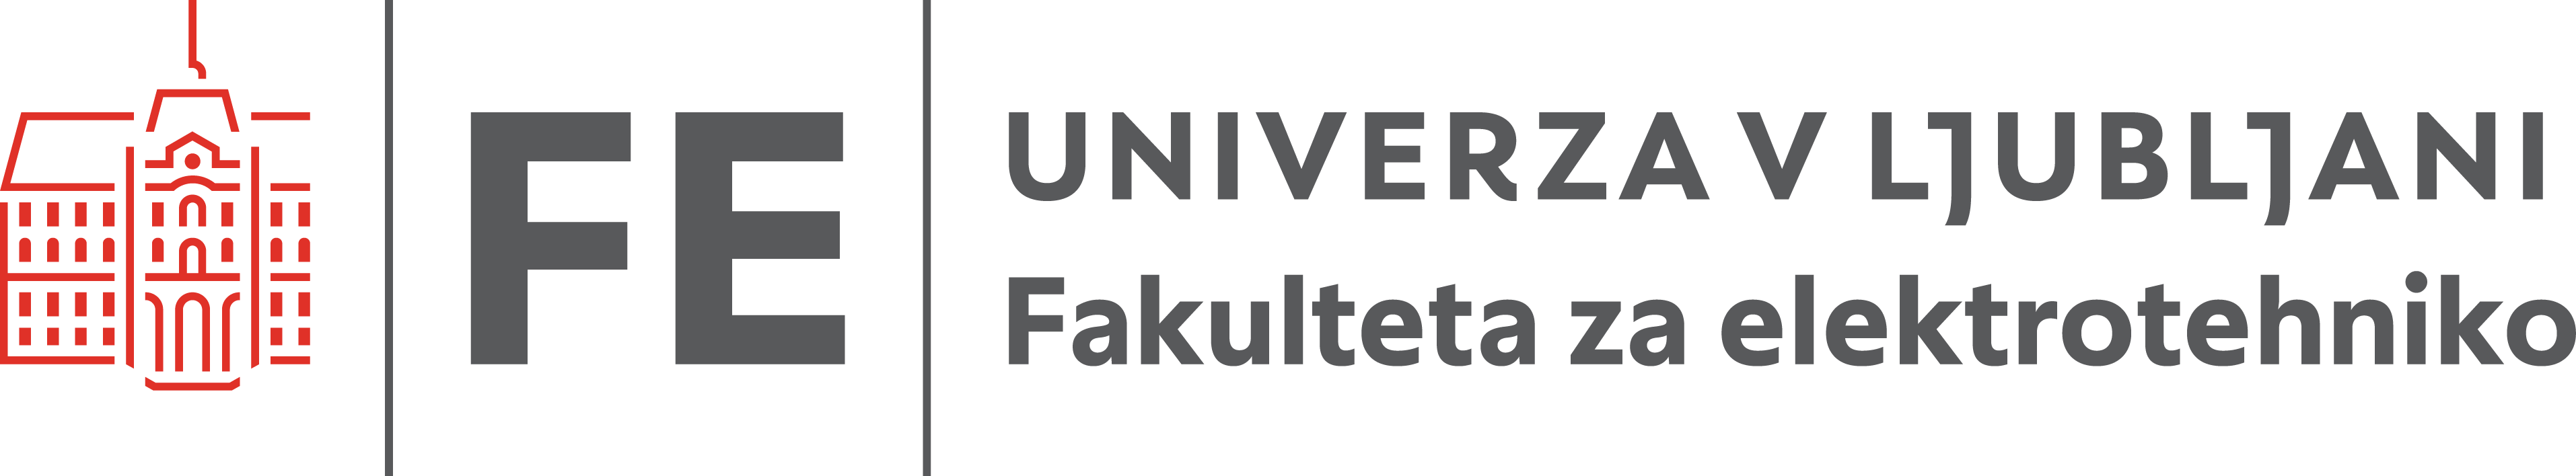 Logo of Faculty of Electrical Engineering, University of Ljubljana